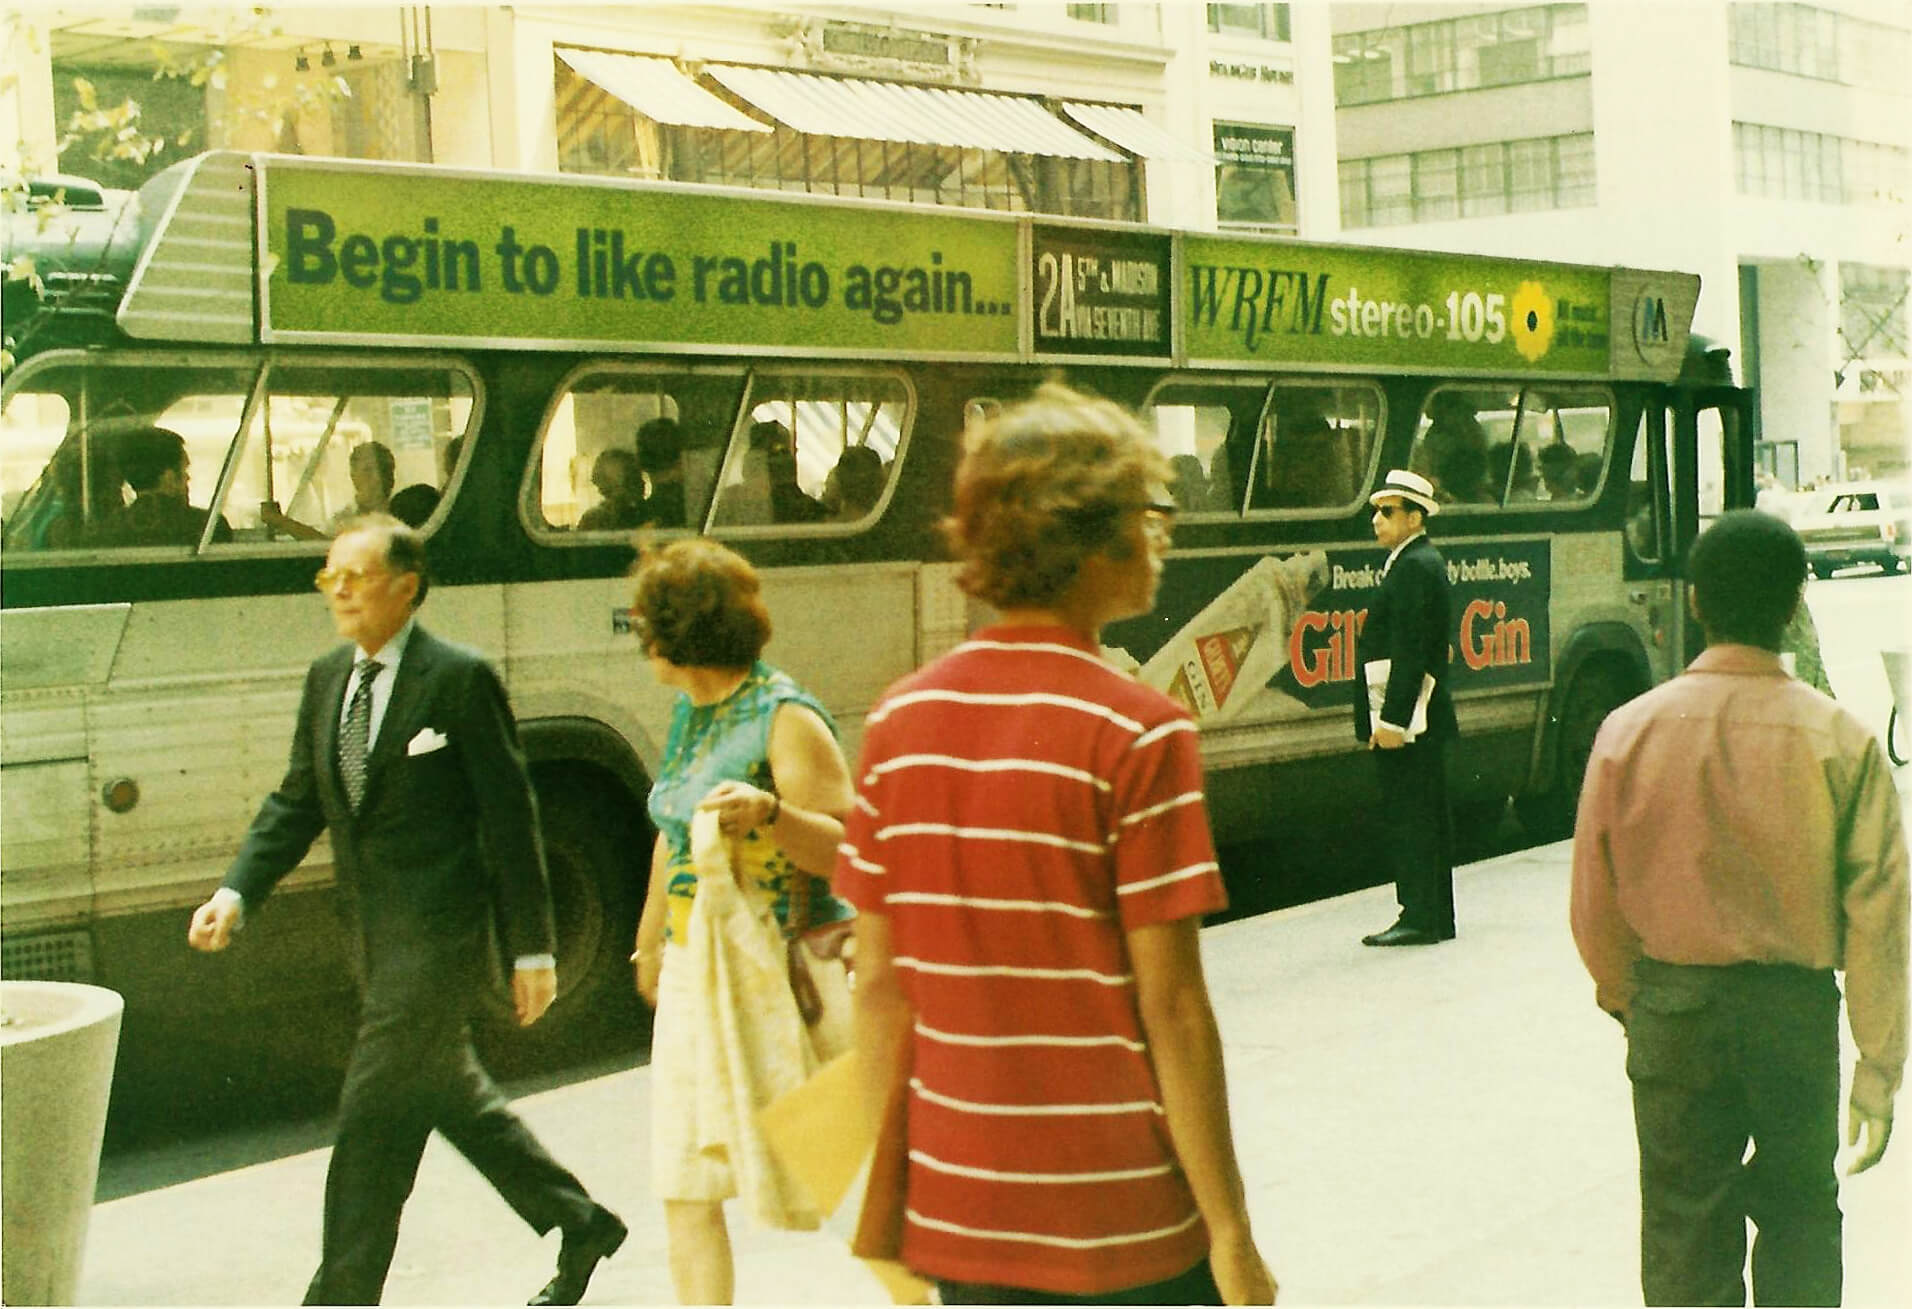 WRFM Begin to like radio again bustop sign